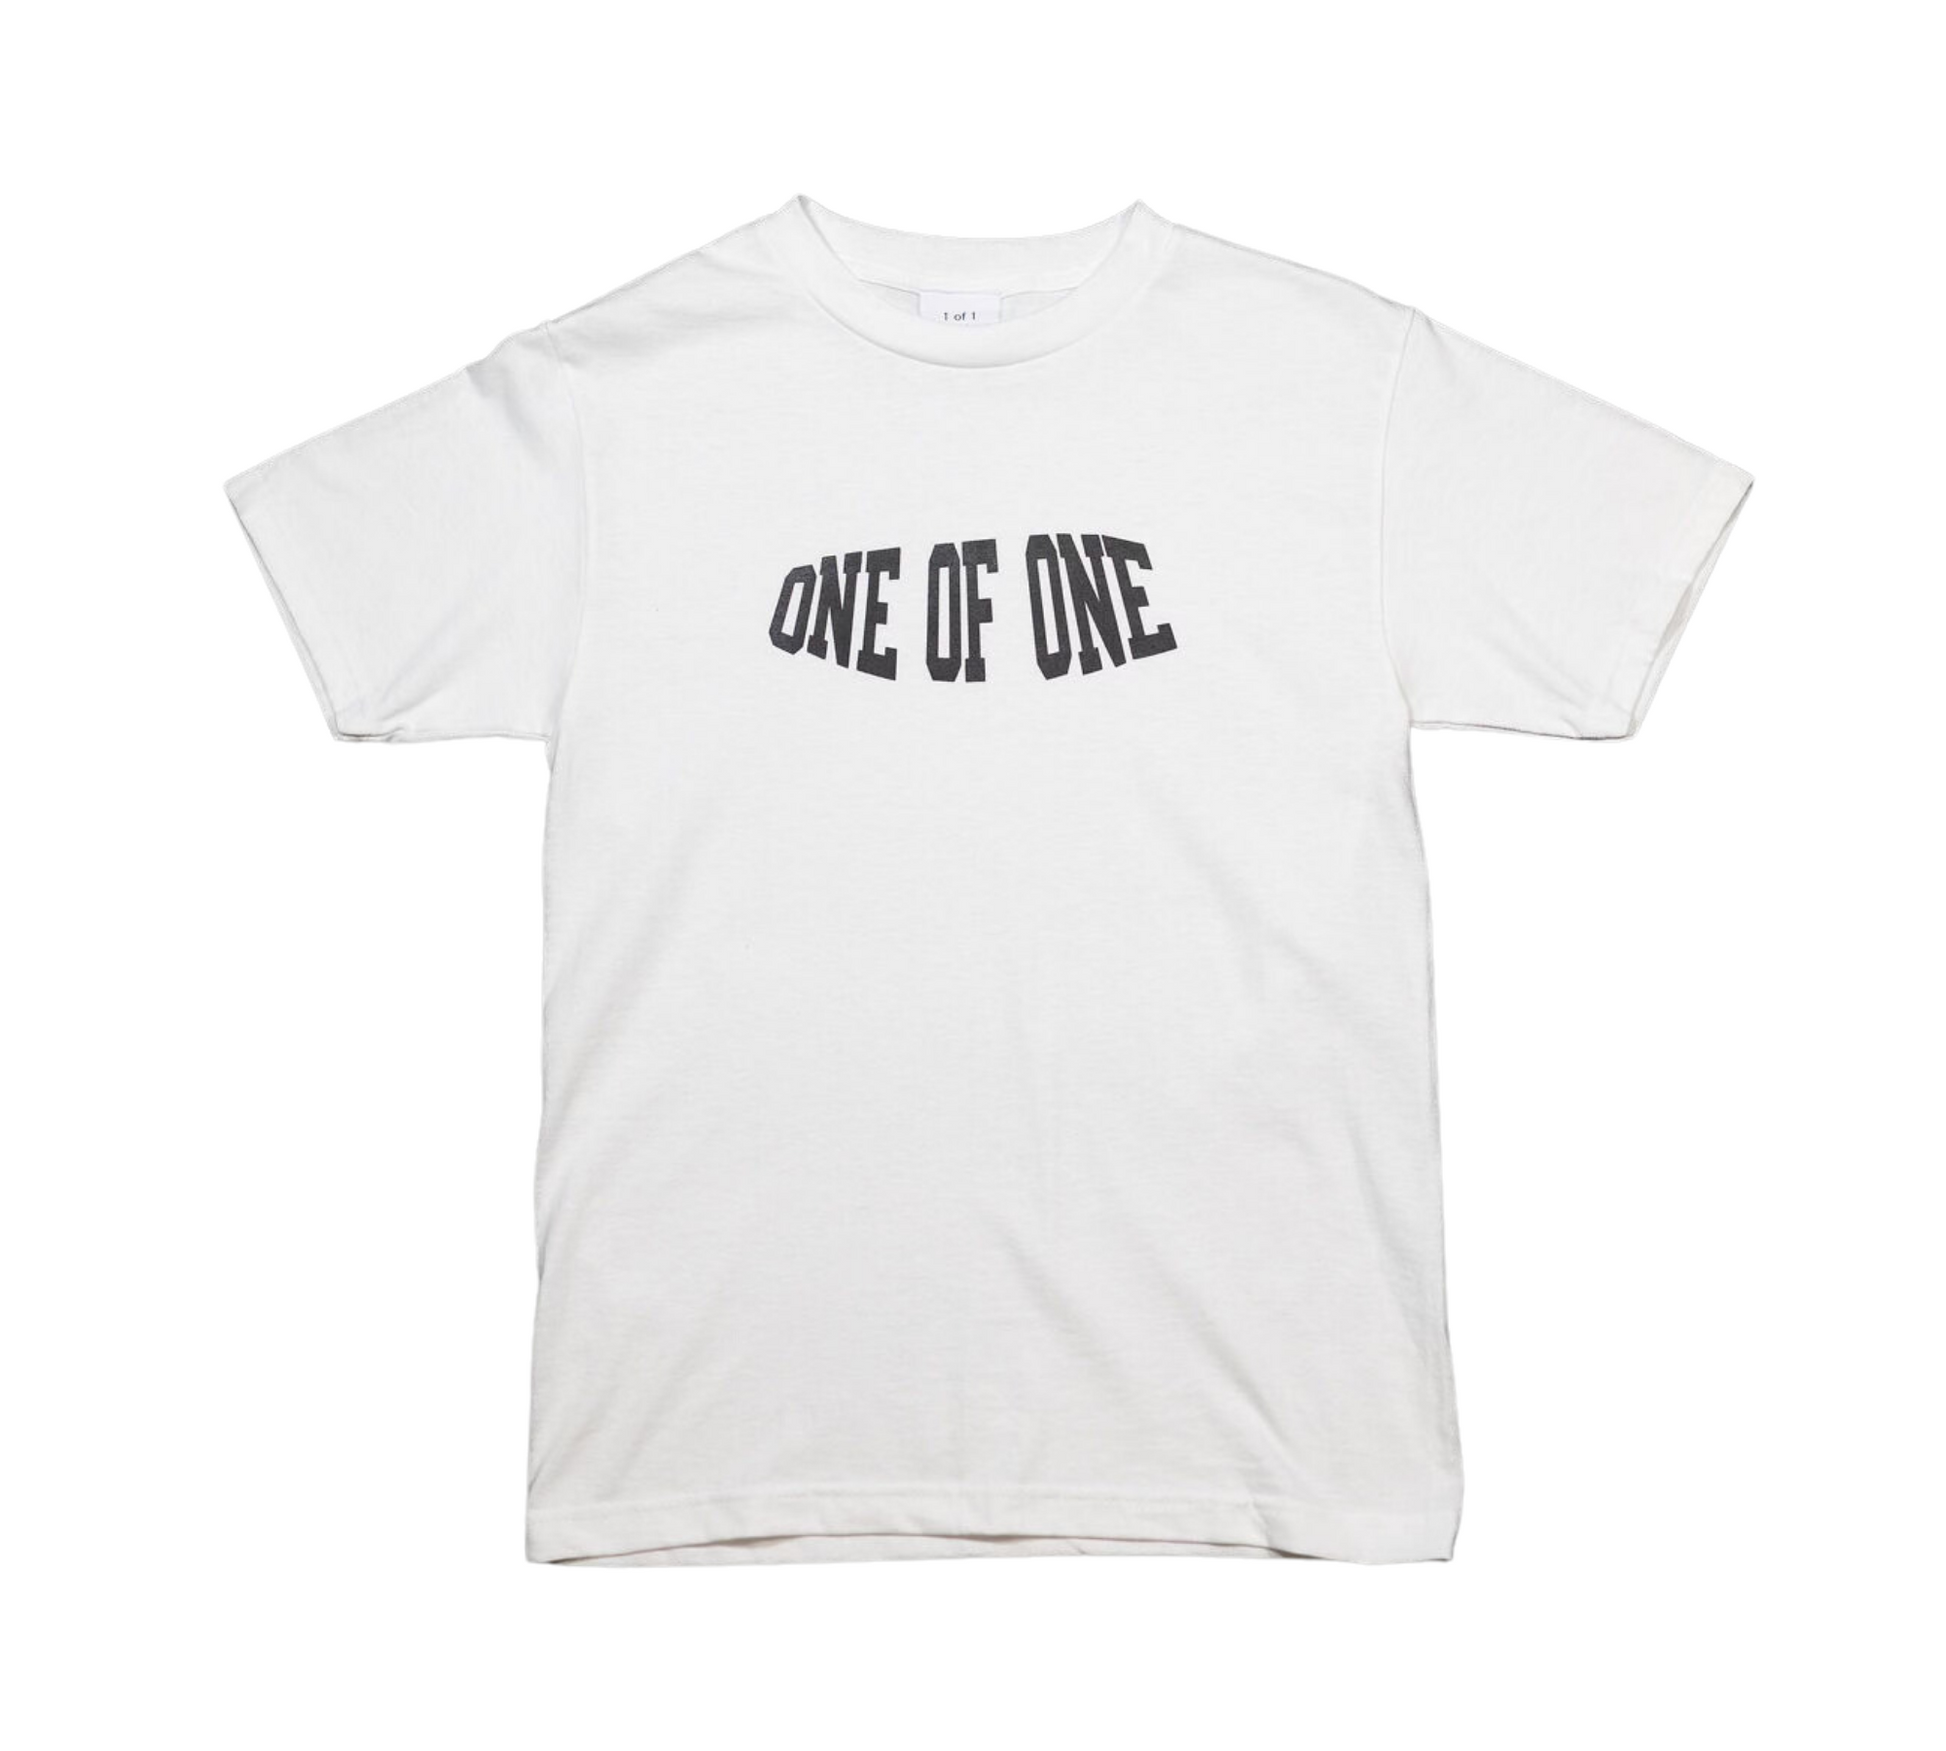 Streetwear Of One – Shirt 1OF1 Cream One